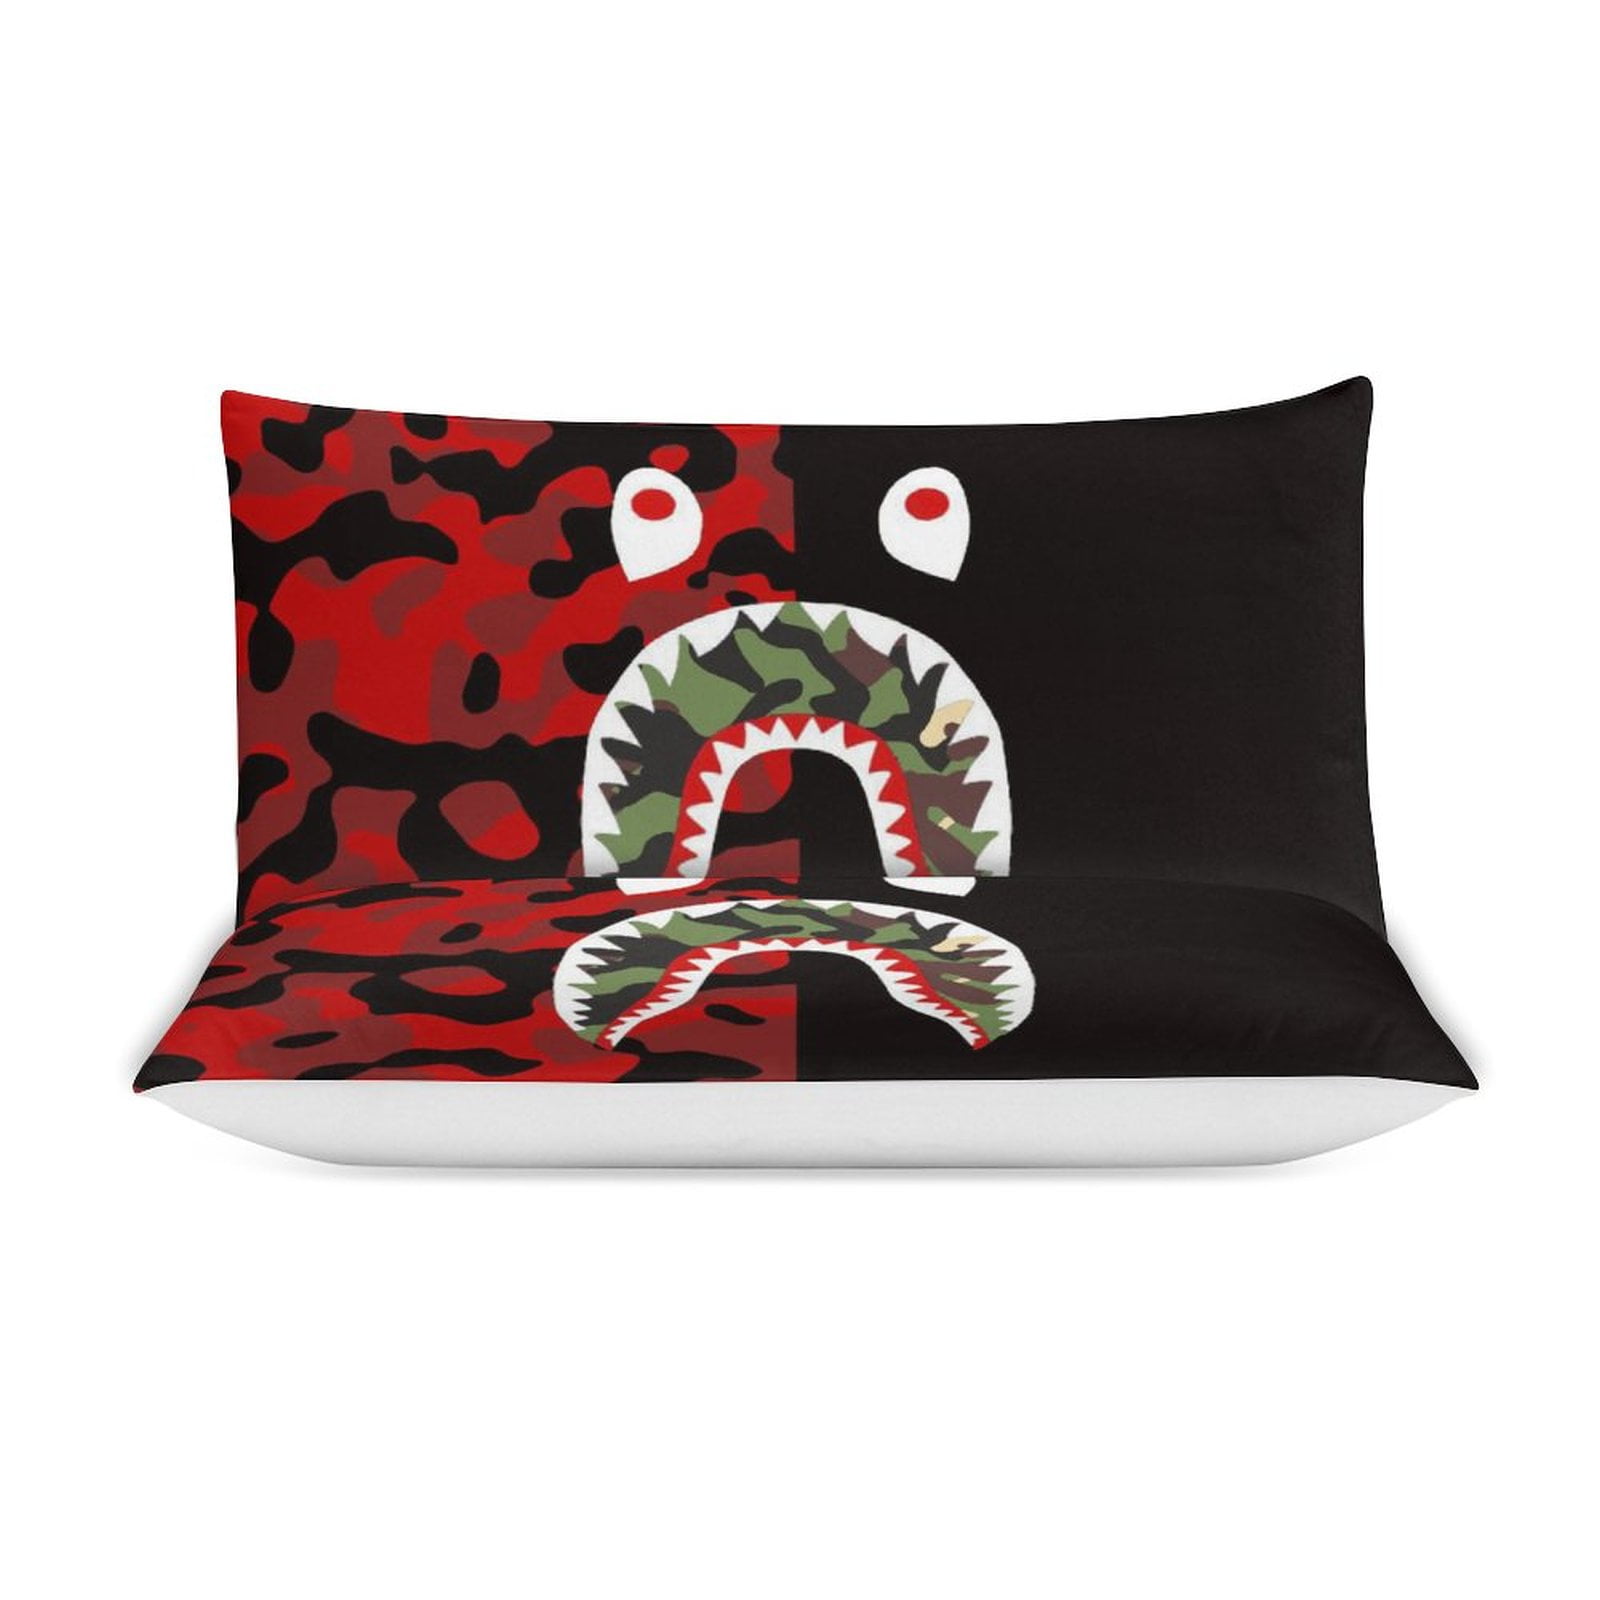 Black Red Bape Camo Pillow Case Army Camouflage Dakimakura Cushions  Pillowcase Decorative Home Sofa Bed Bedding Car Nordic - AliExpress